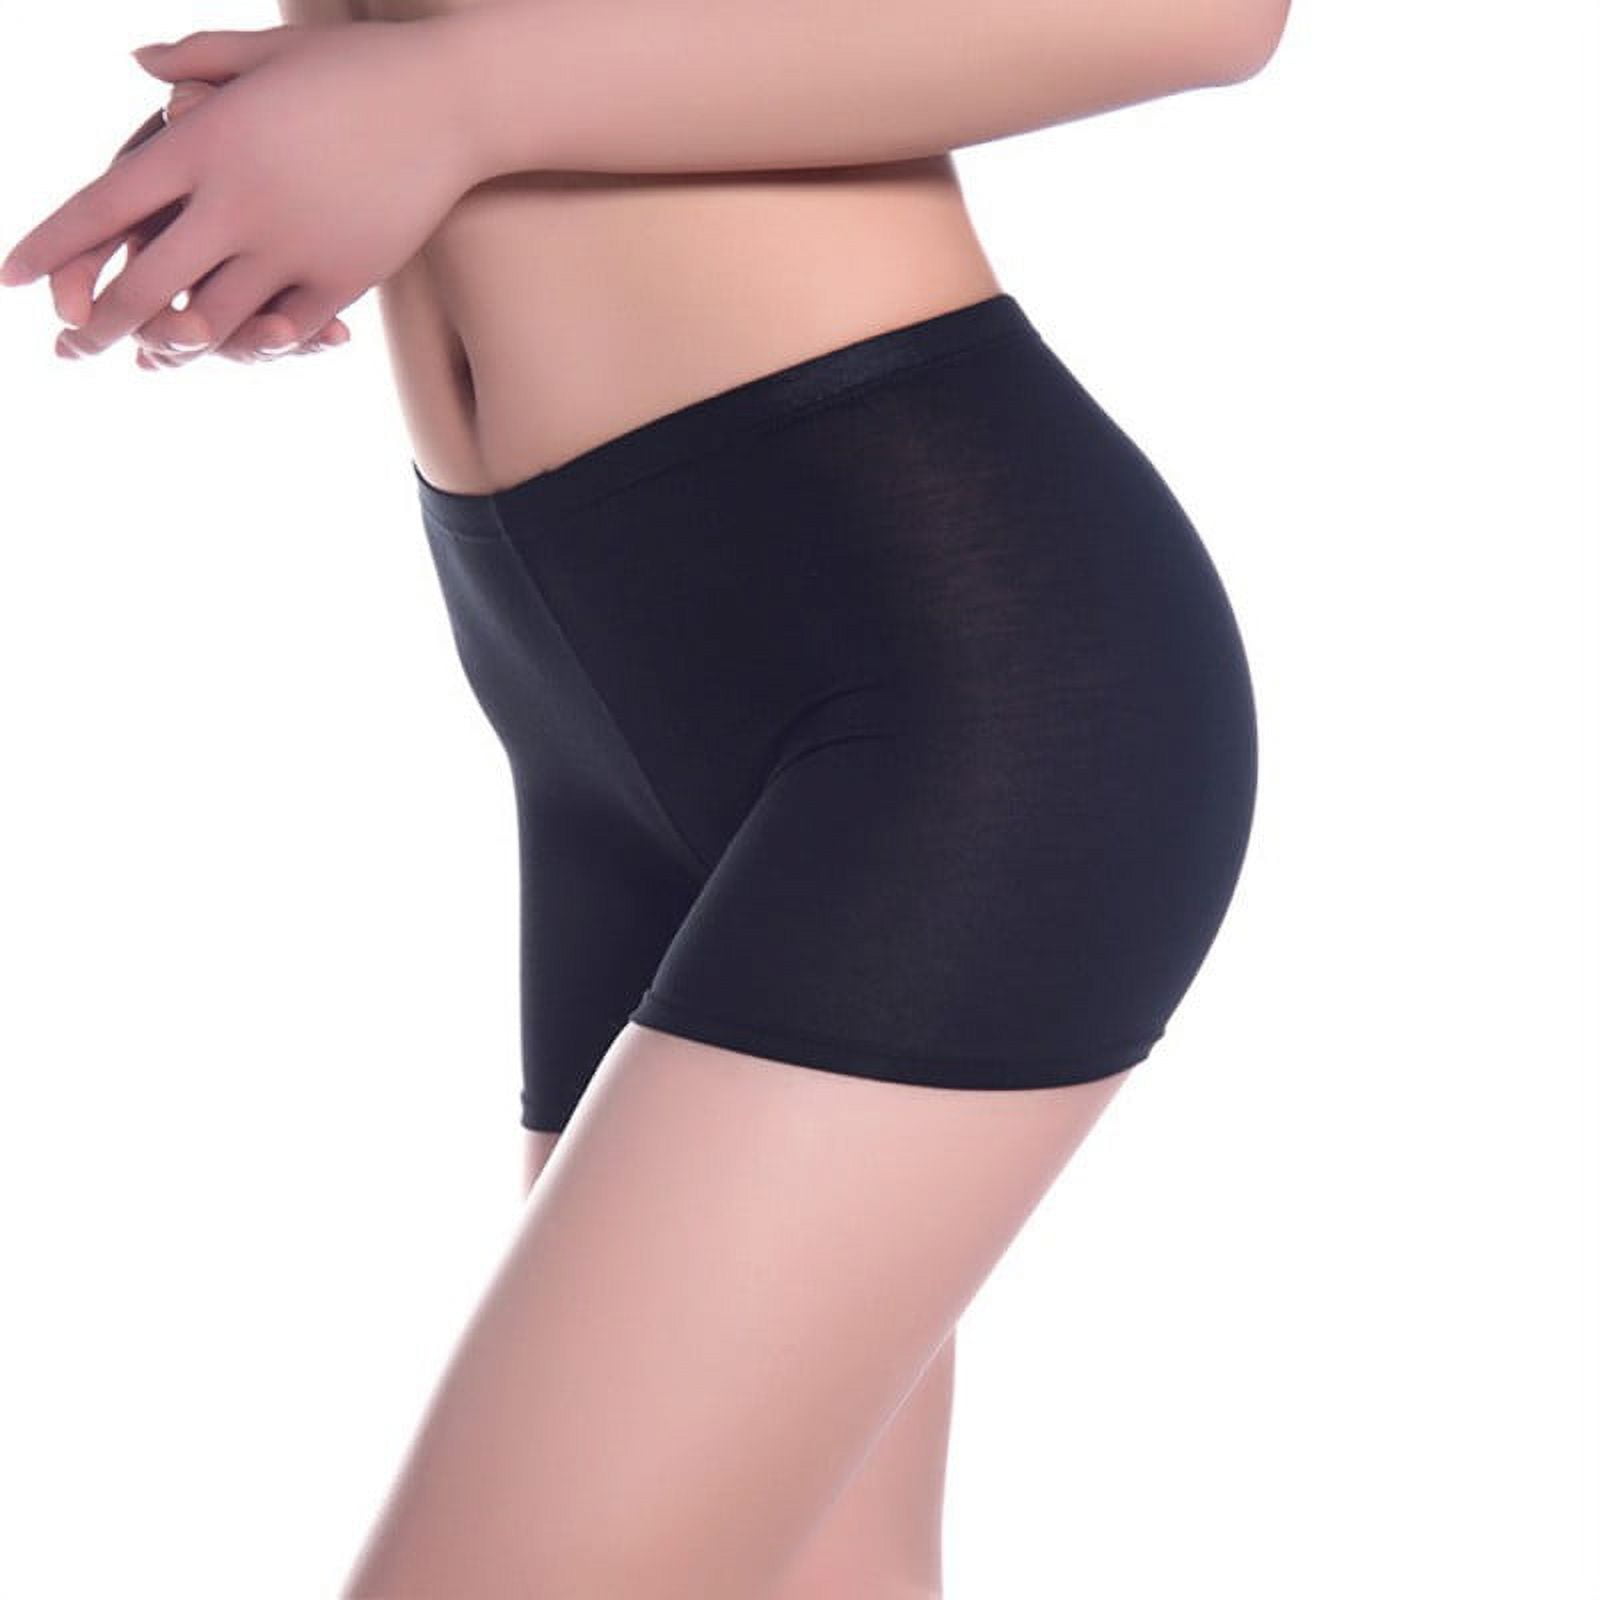 Women Workout Yoga Shorts Stretch Shorts Panties Premium Soft Solid Color  Underwear Cheerleader Running Dance Volleyball Short Pants 